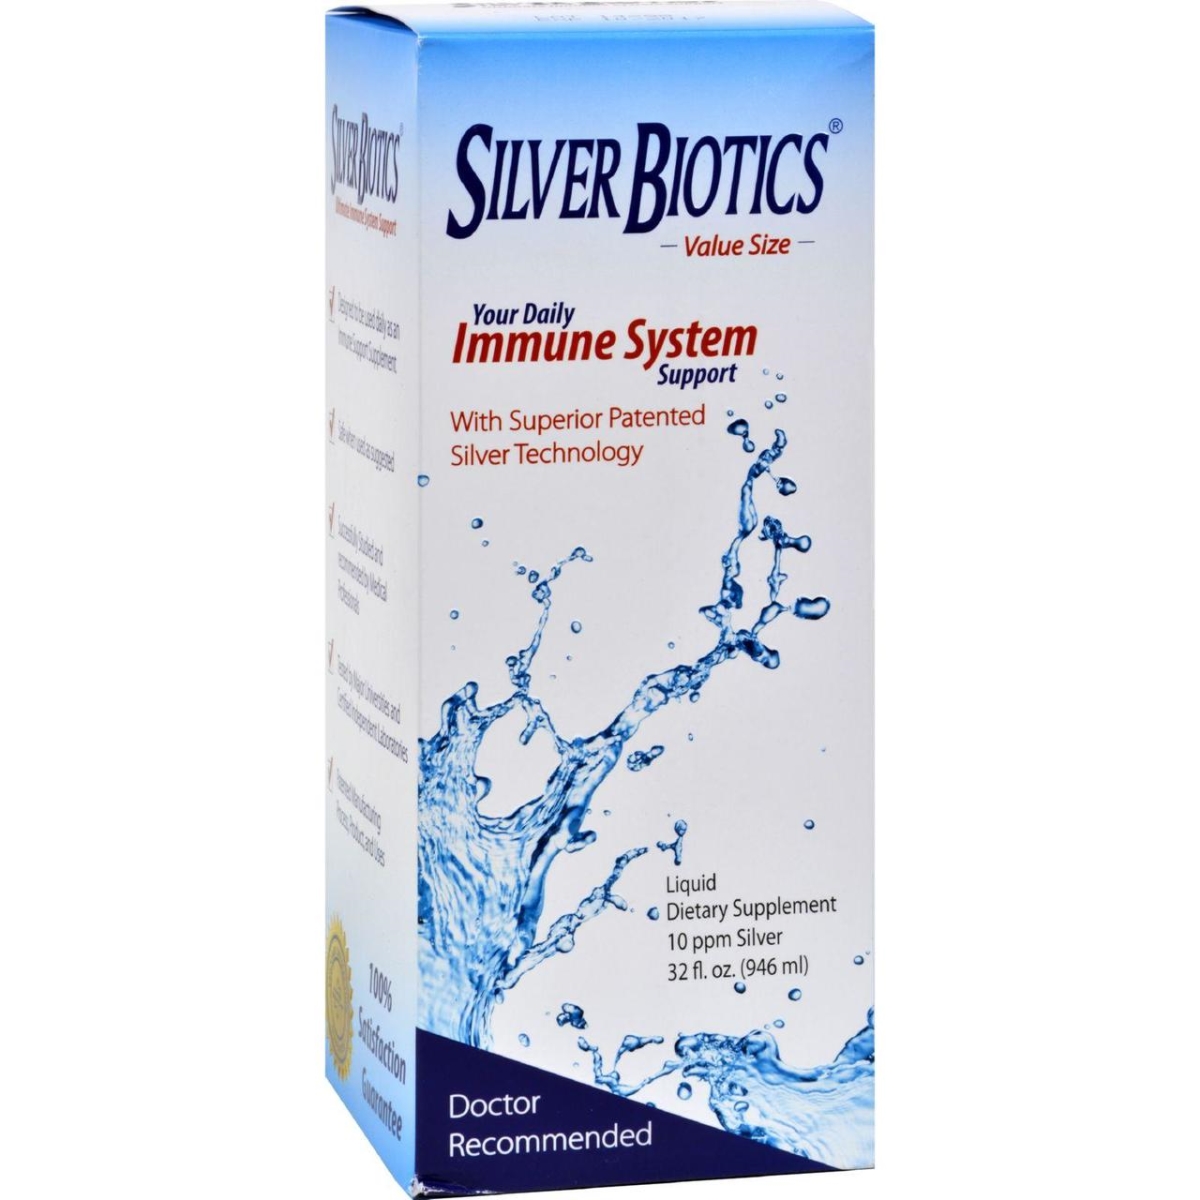 Hg1226216 32 Fl Oz Silver Biotics